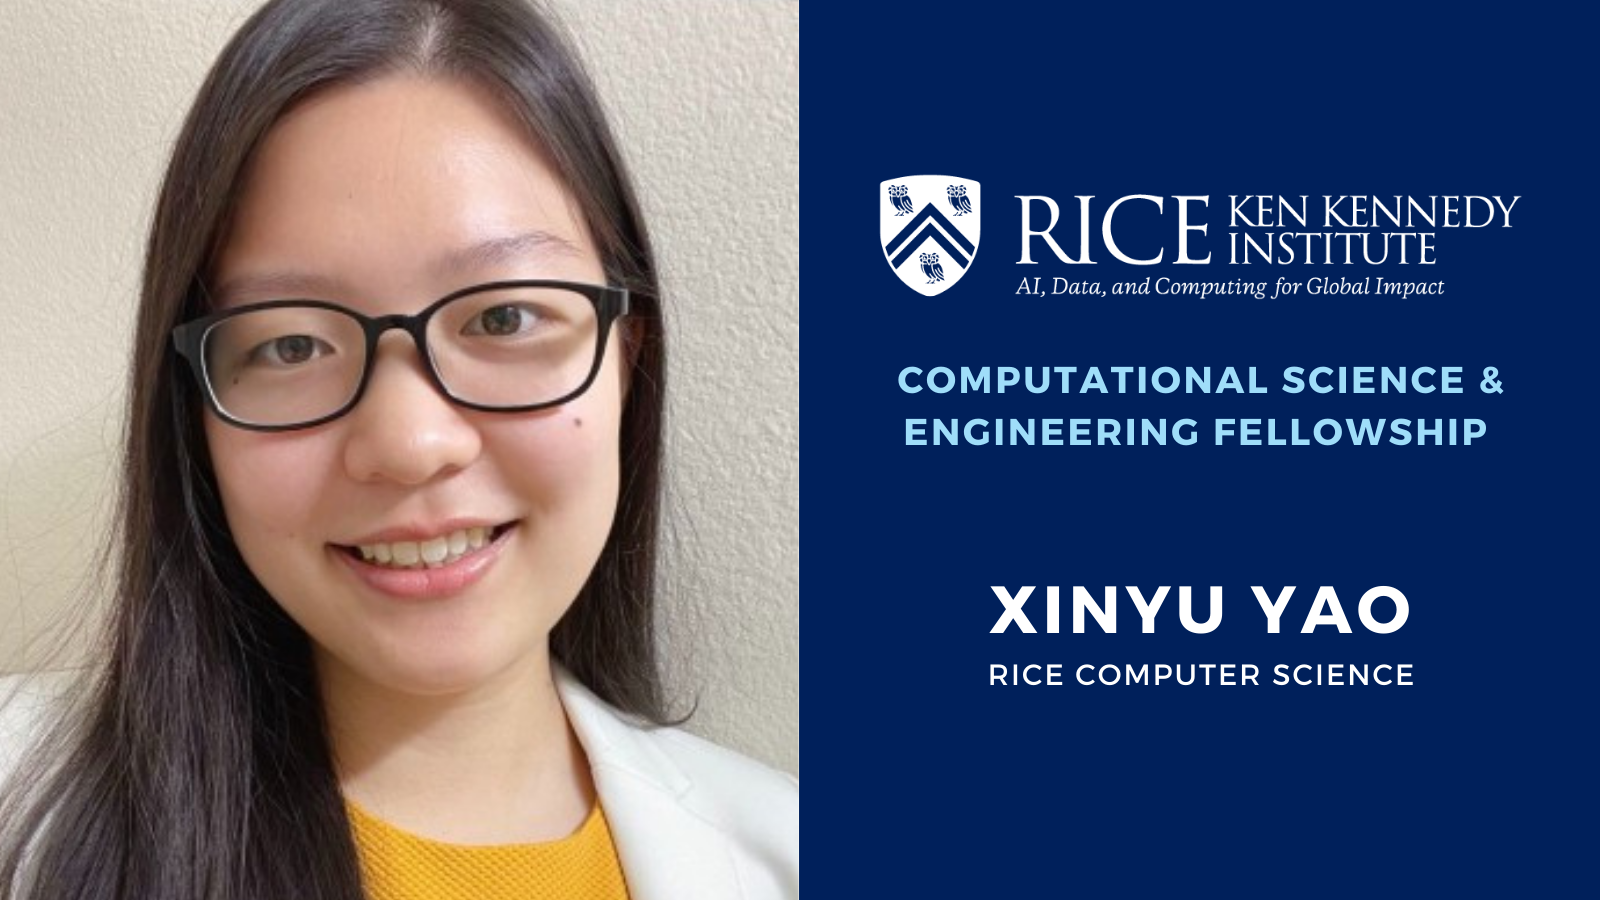 The Ken Kennedy Institute awards Computational Science & Engineering Fellowship to Xinyu Yao